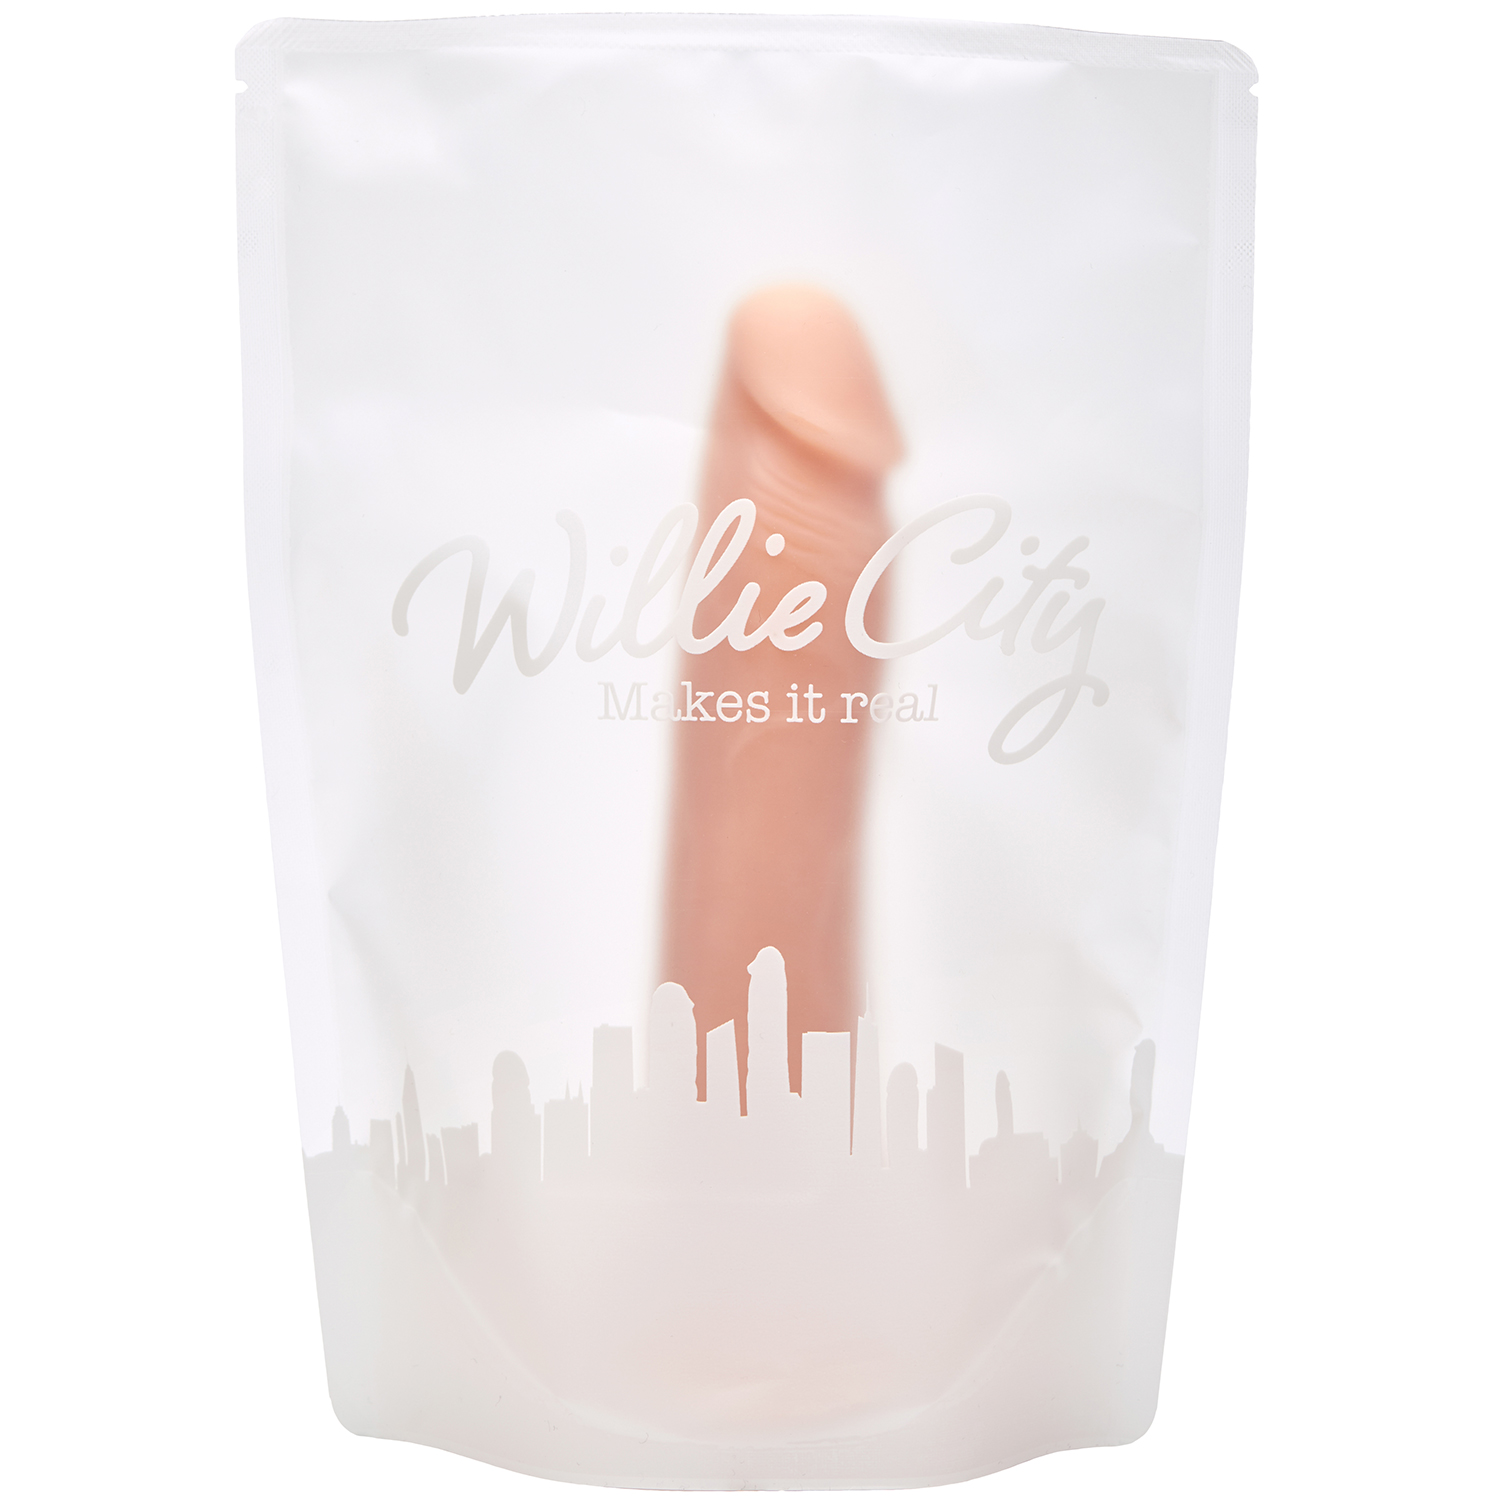 Willie City Willie City Luxe Realistisk Silikondildo med Sugekopp 18 cm - Beige